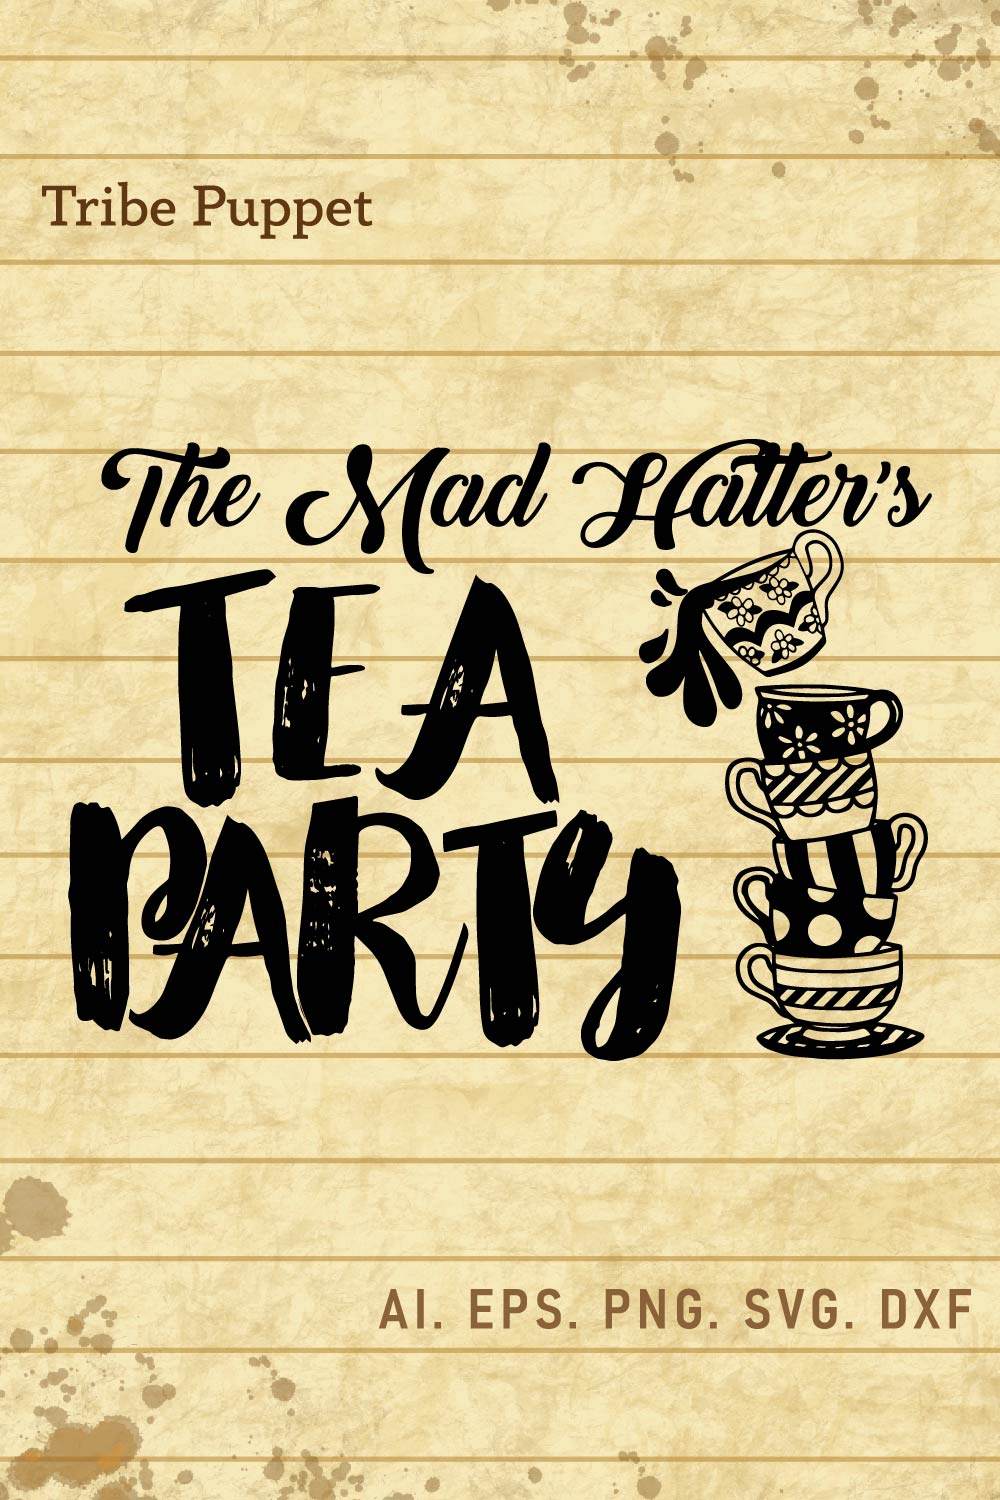 Alice's Tea Party pinterest preview image.